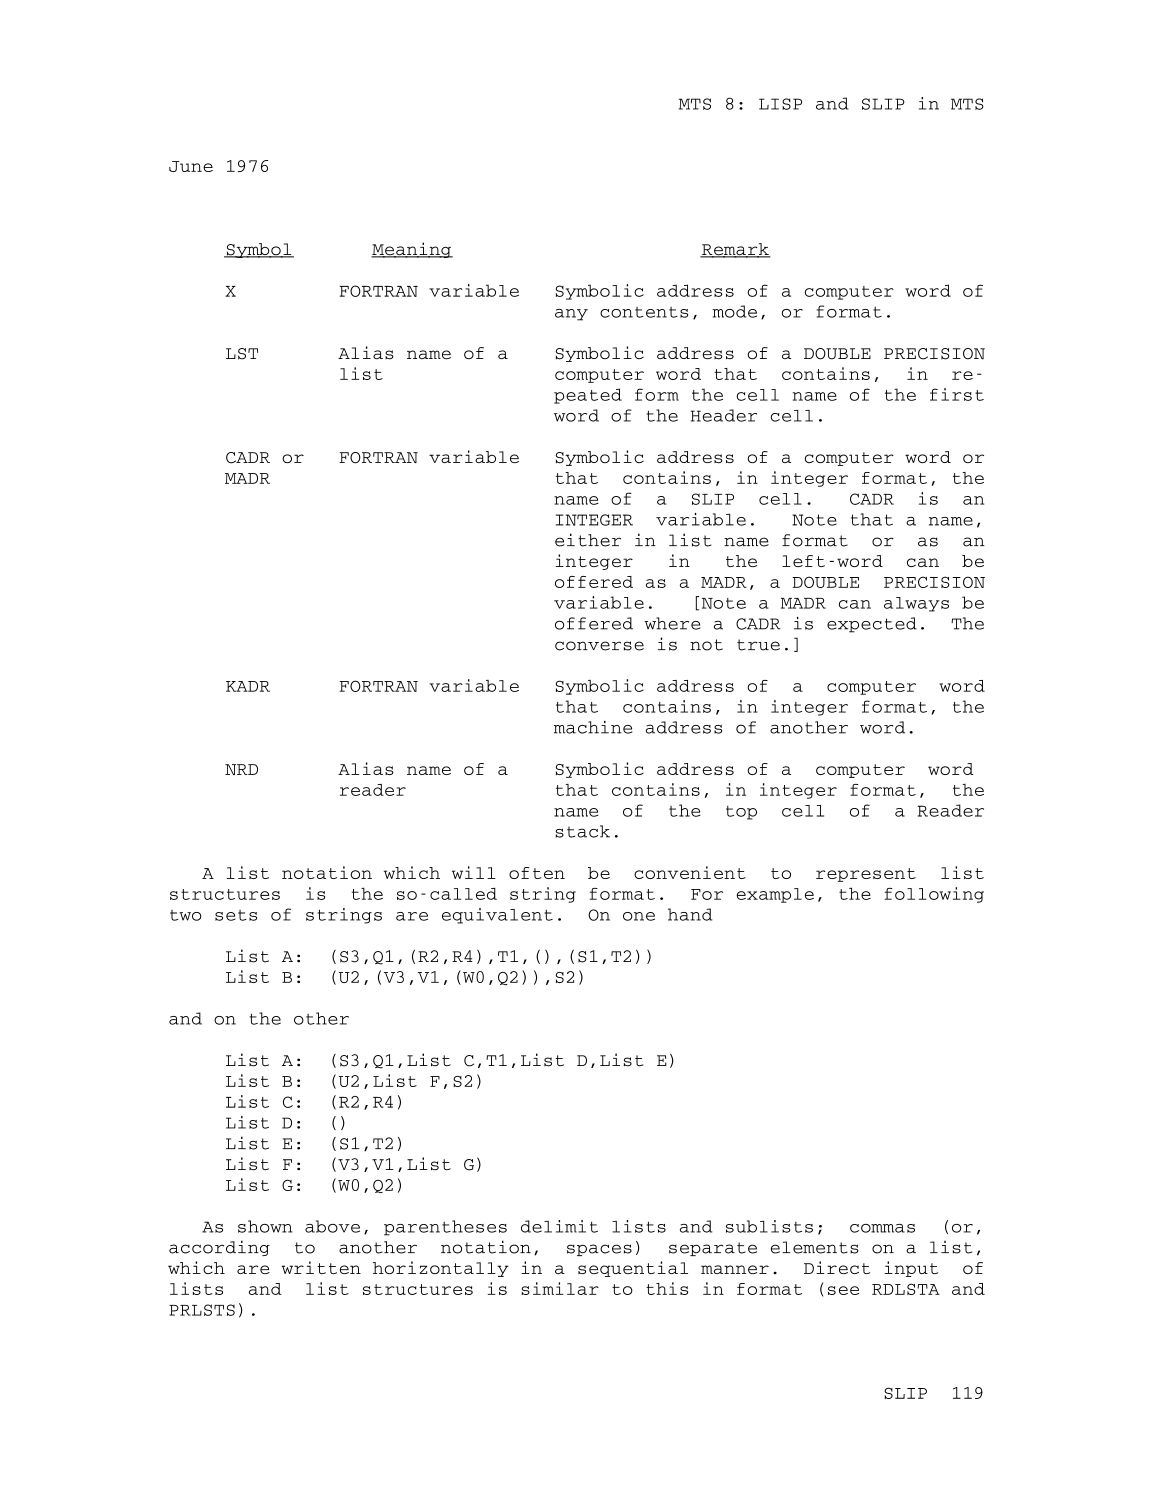 MTS Volume 8 - LISP and SLIP page 118